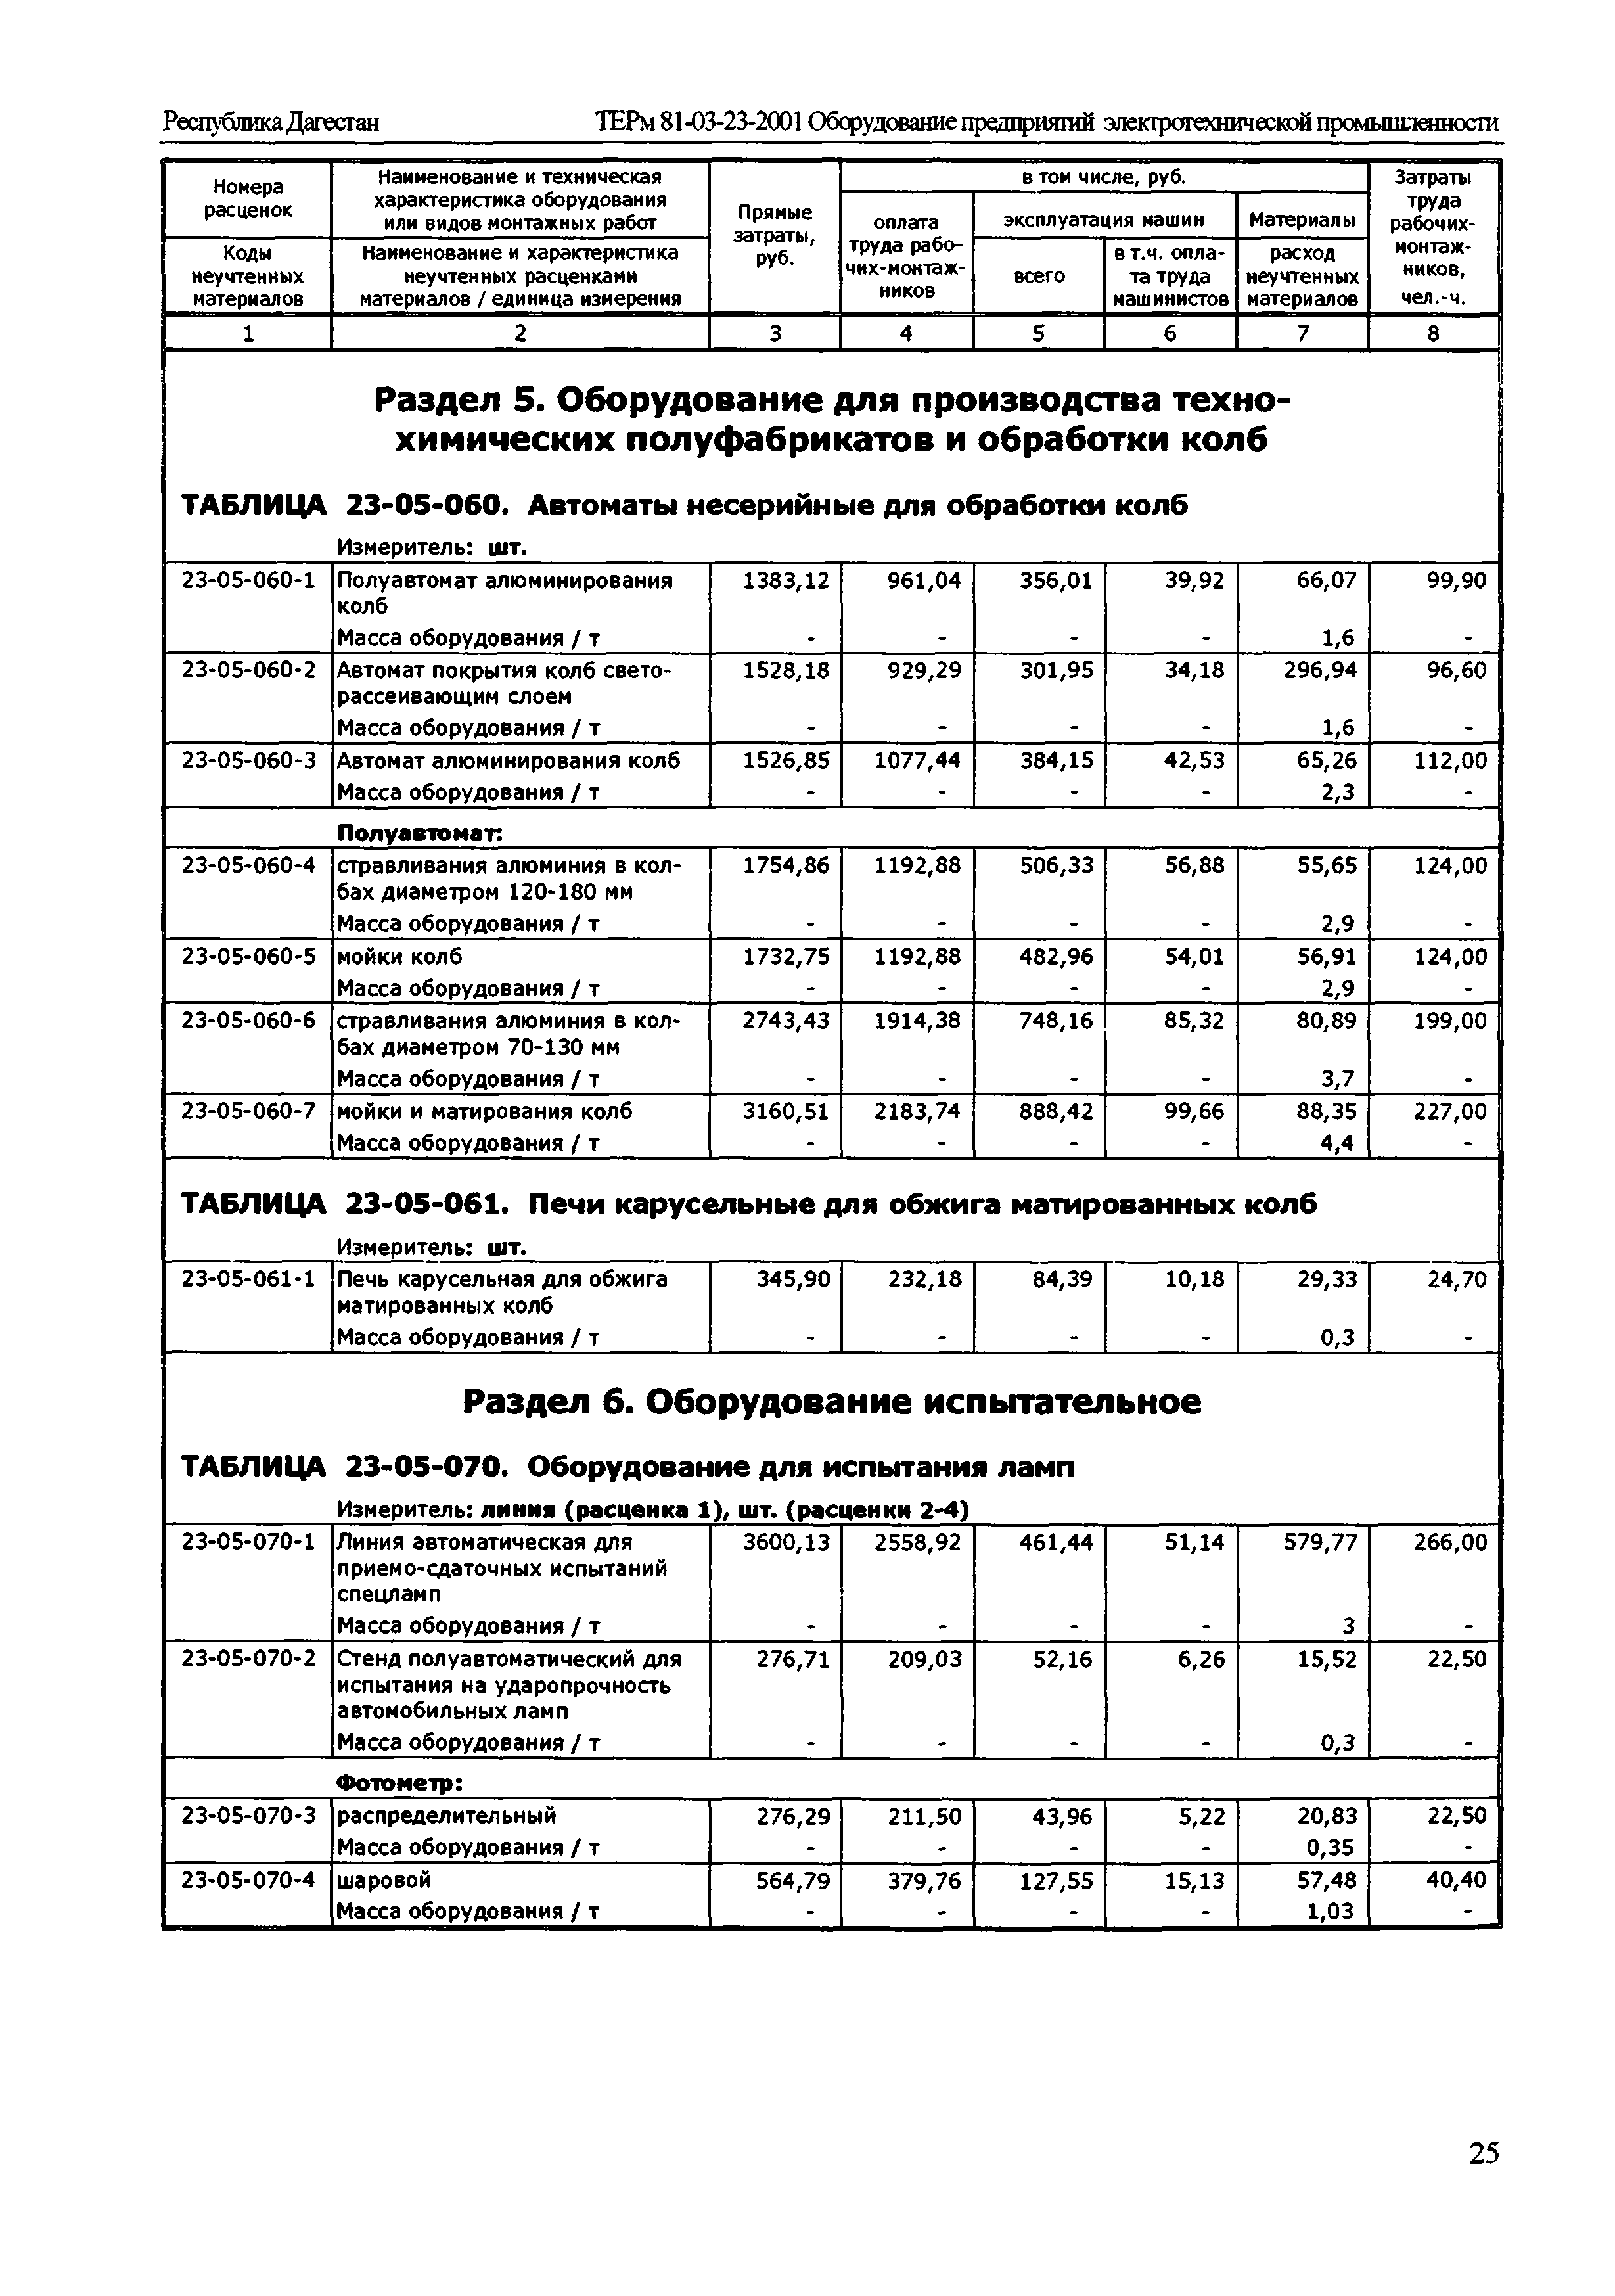 ТЕРм Республика Дагестан 2001-23